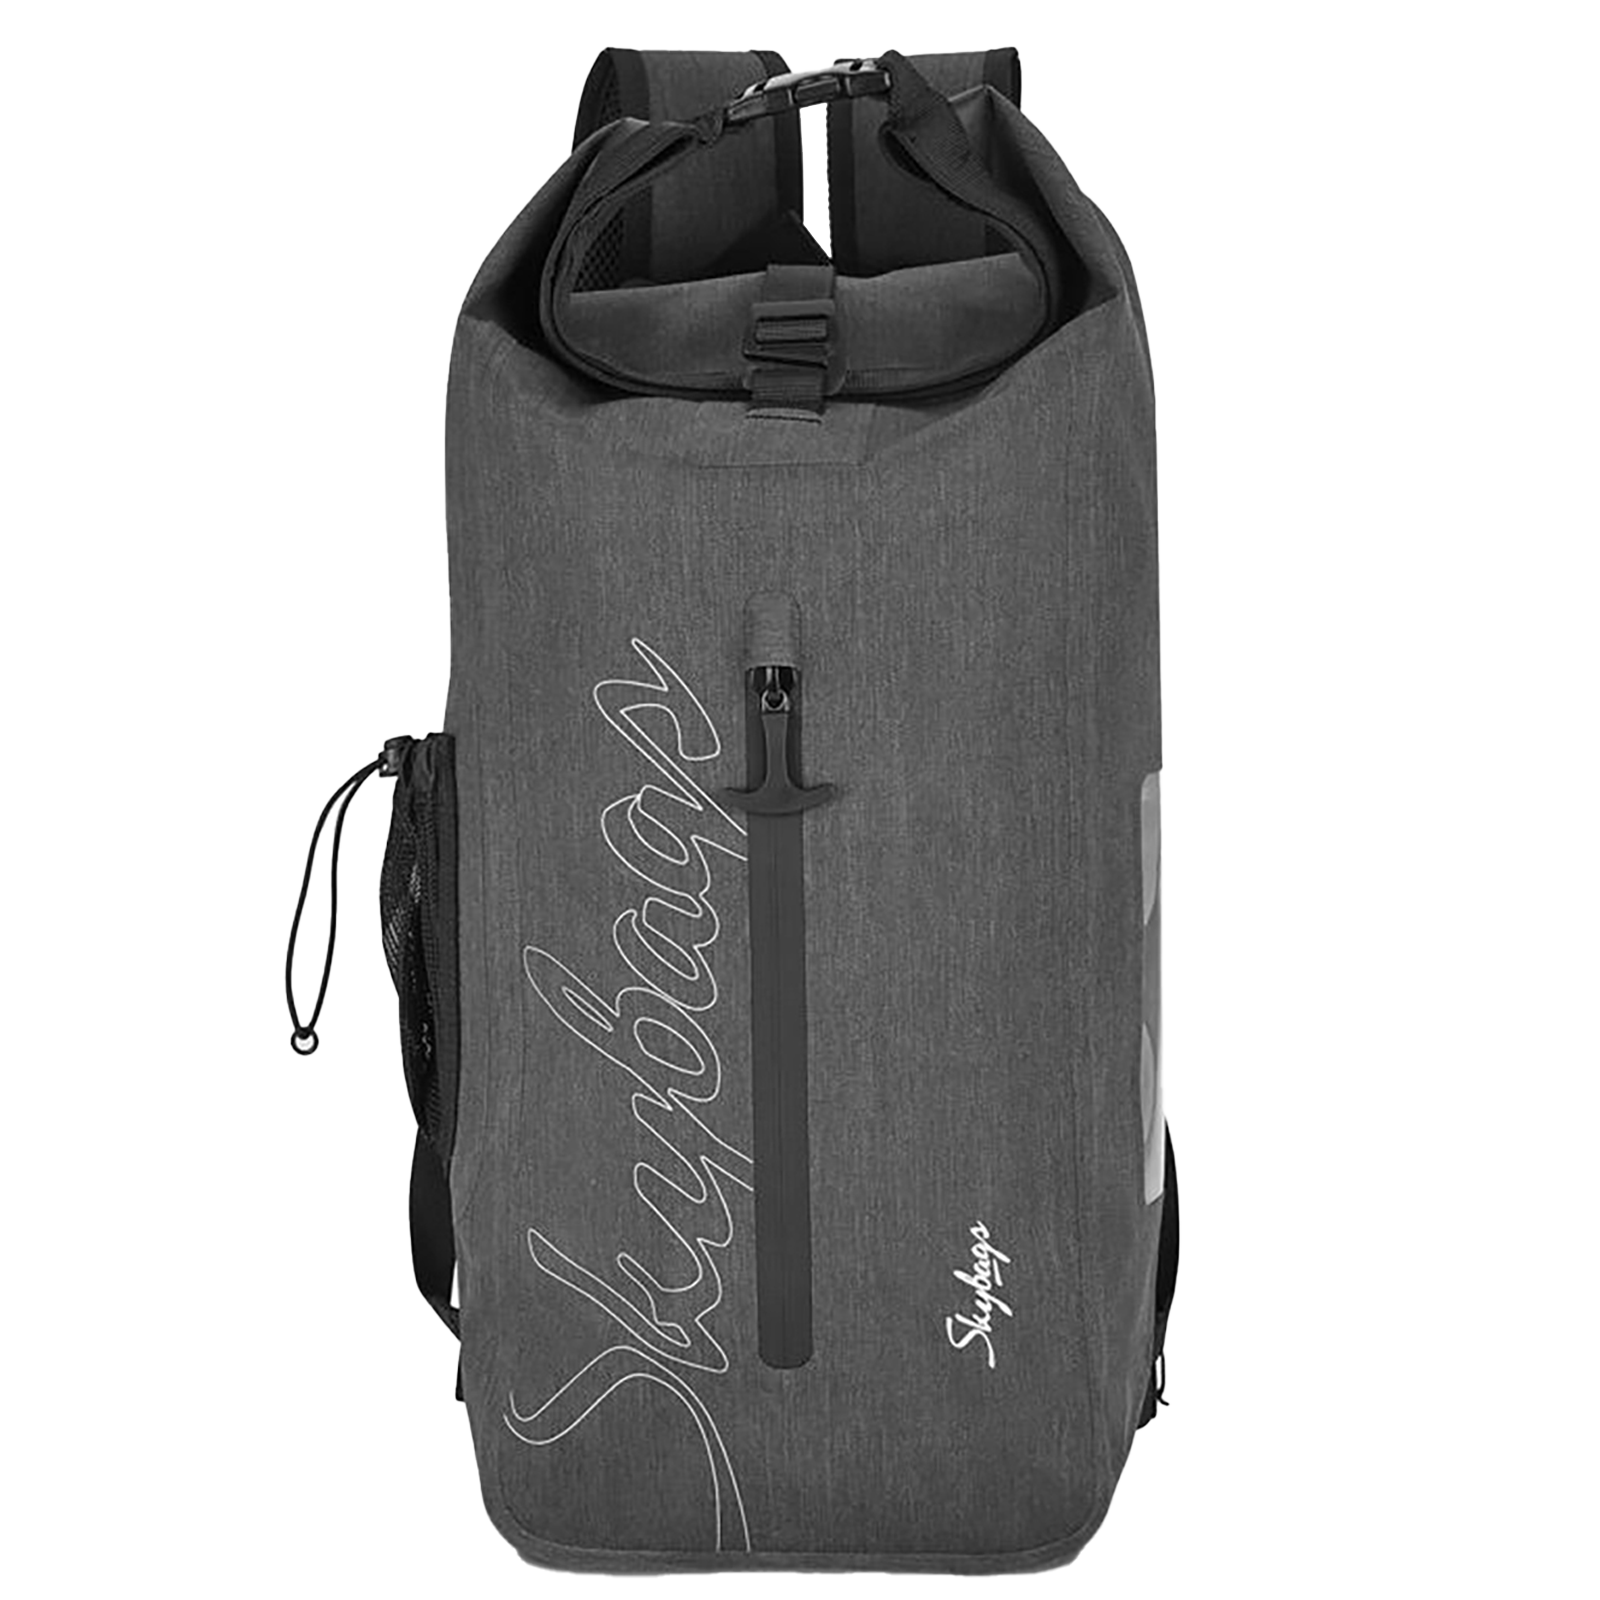 Sky Bags Protekt 24 Litres Waterproof Canvas Laptop Backpack (Rain Cover, LPBPPRTGRY, Grey)